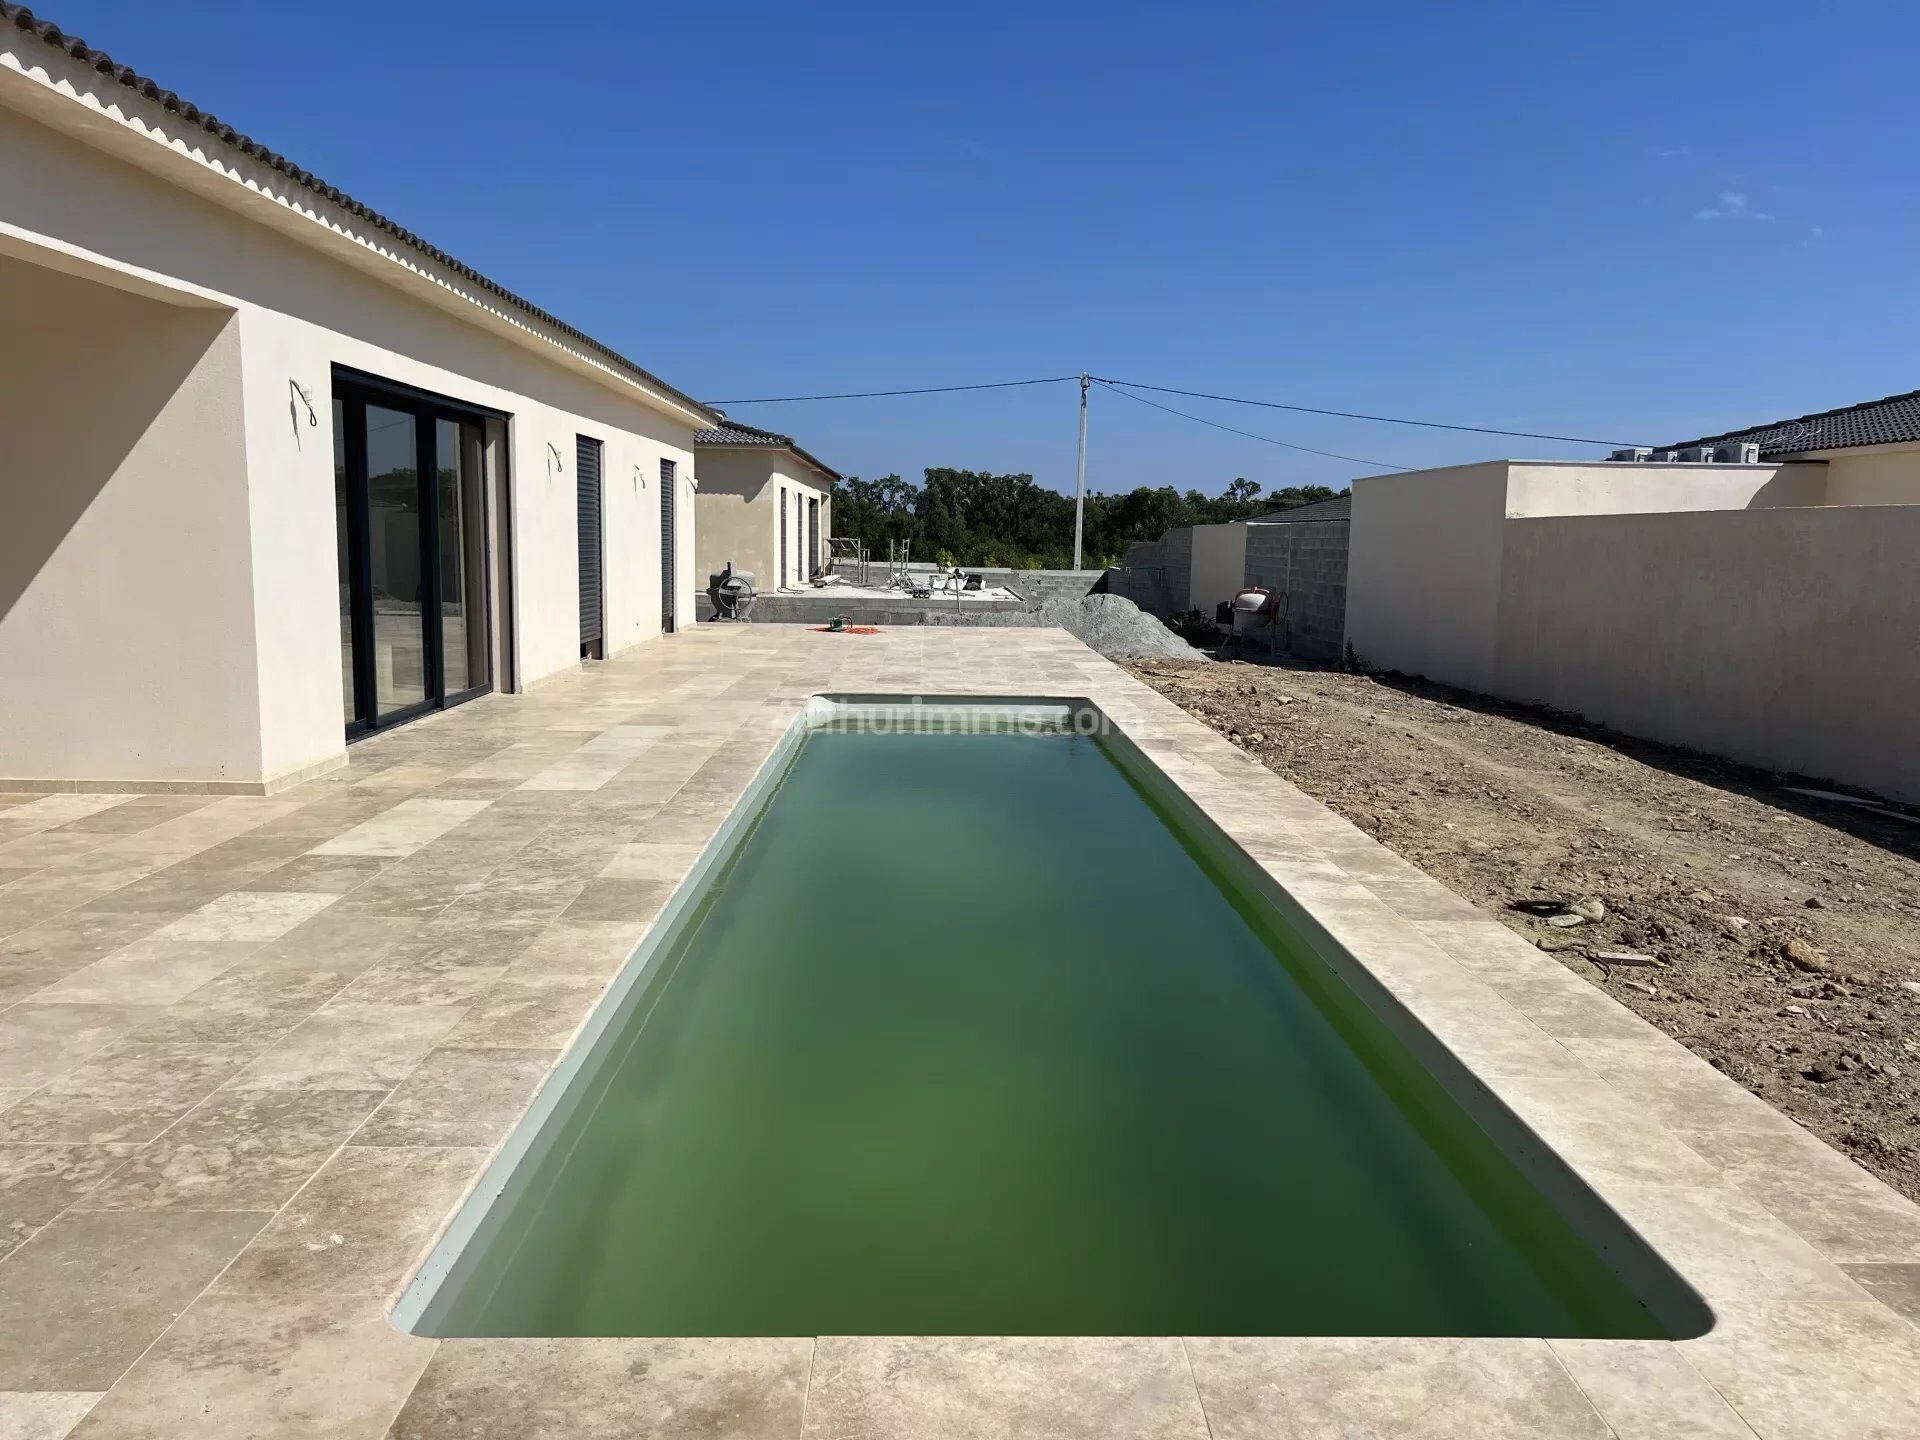 Vente Maison 115m² 4 Pièces à Sari-Solenzara (20145) - Arthurimmo